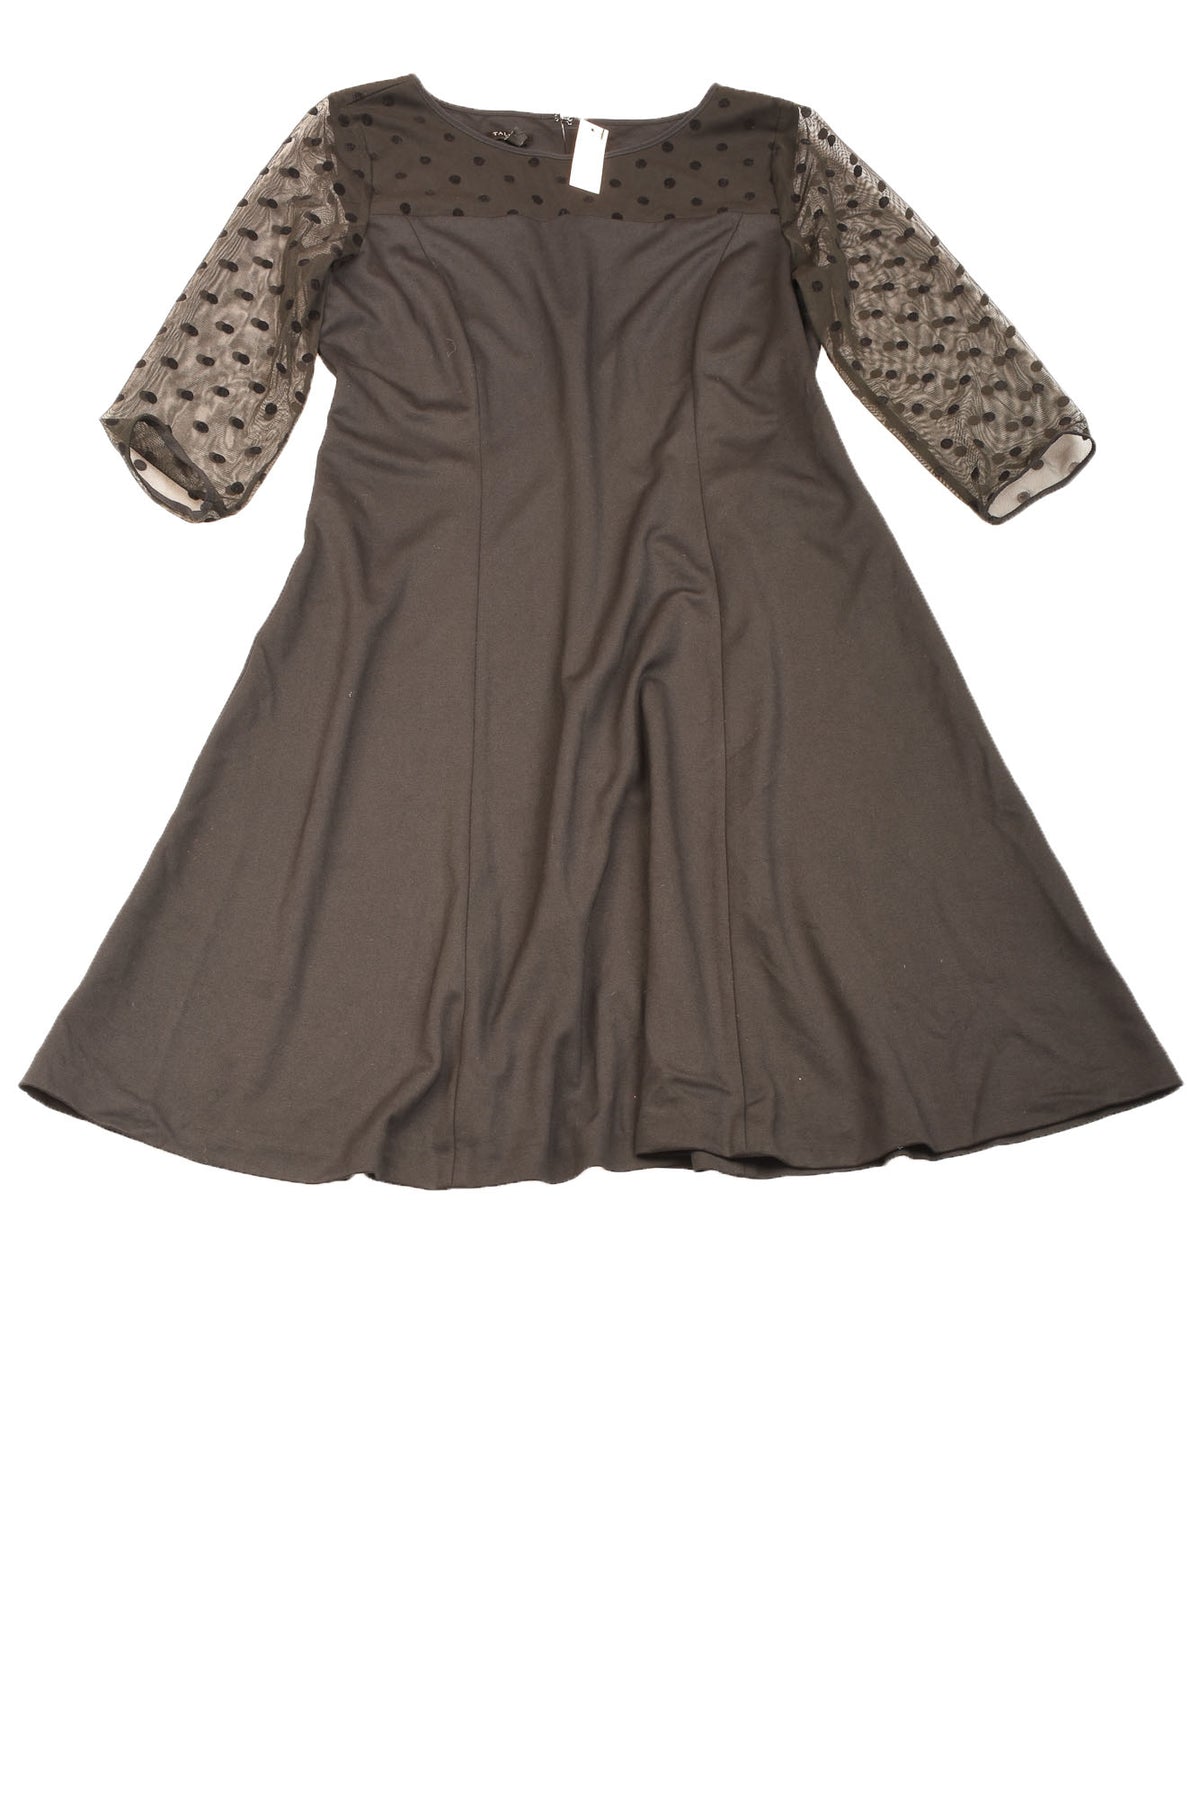 Talbots Size 8 Women's Petite Dress - Your Designer Thrift